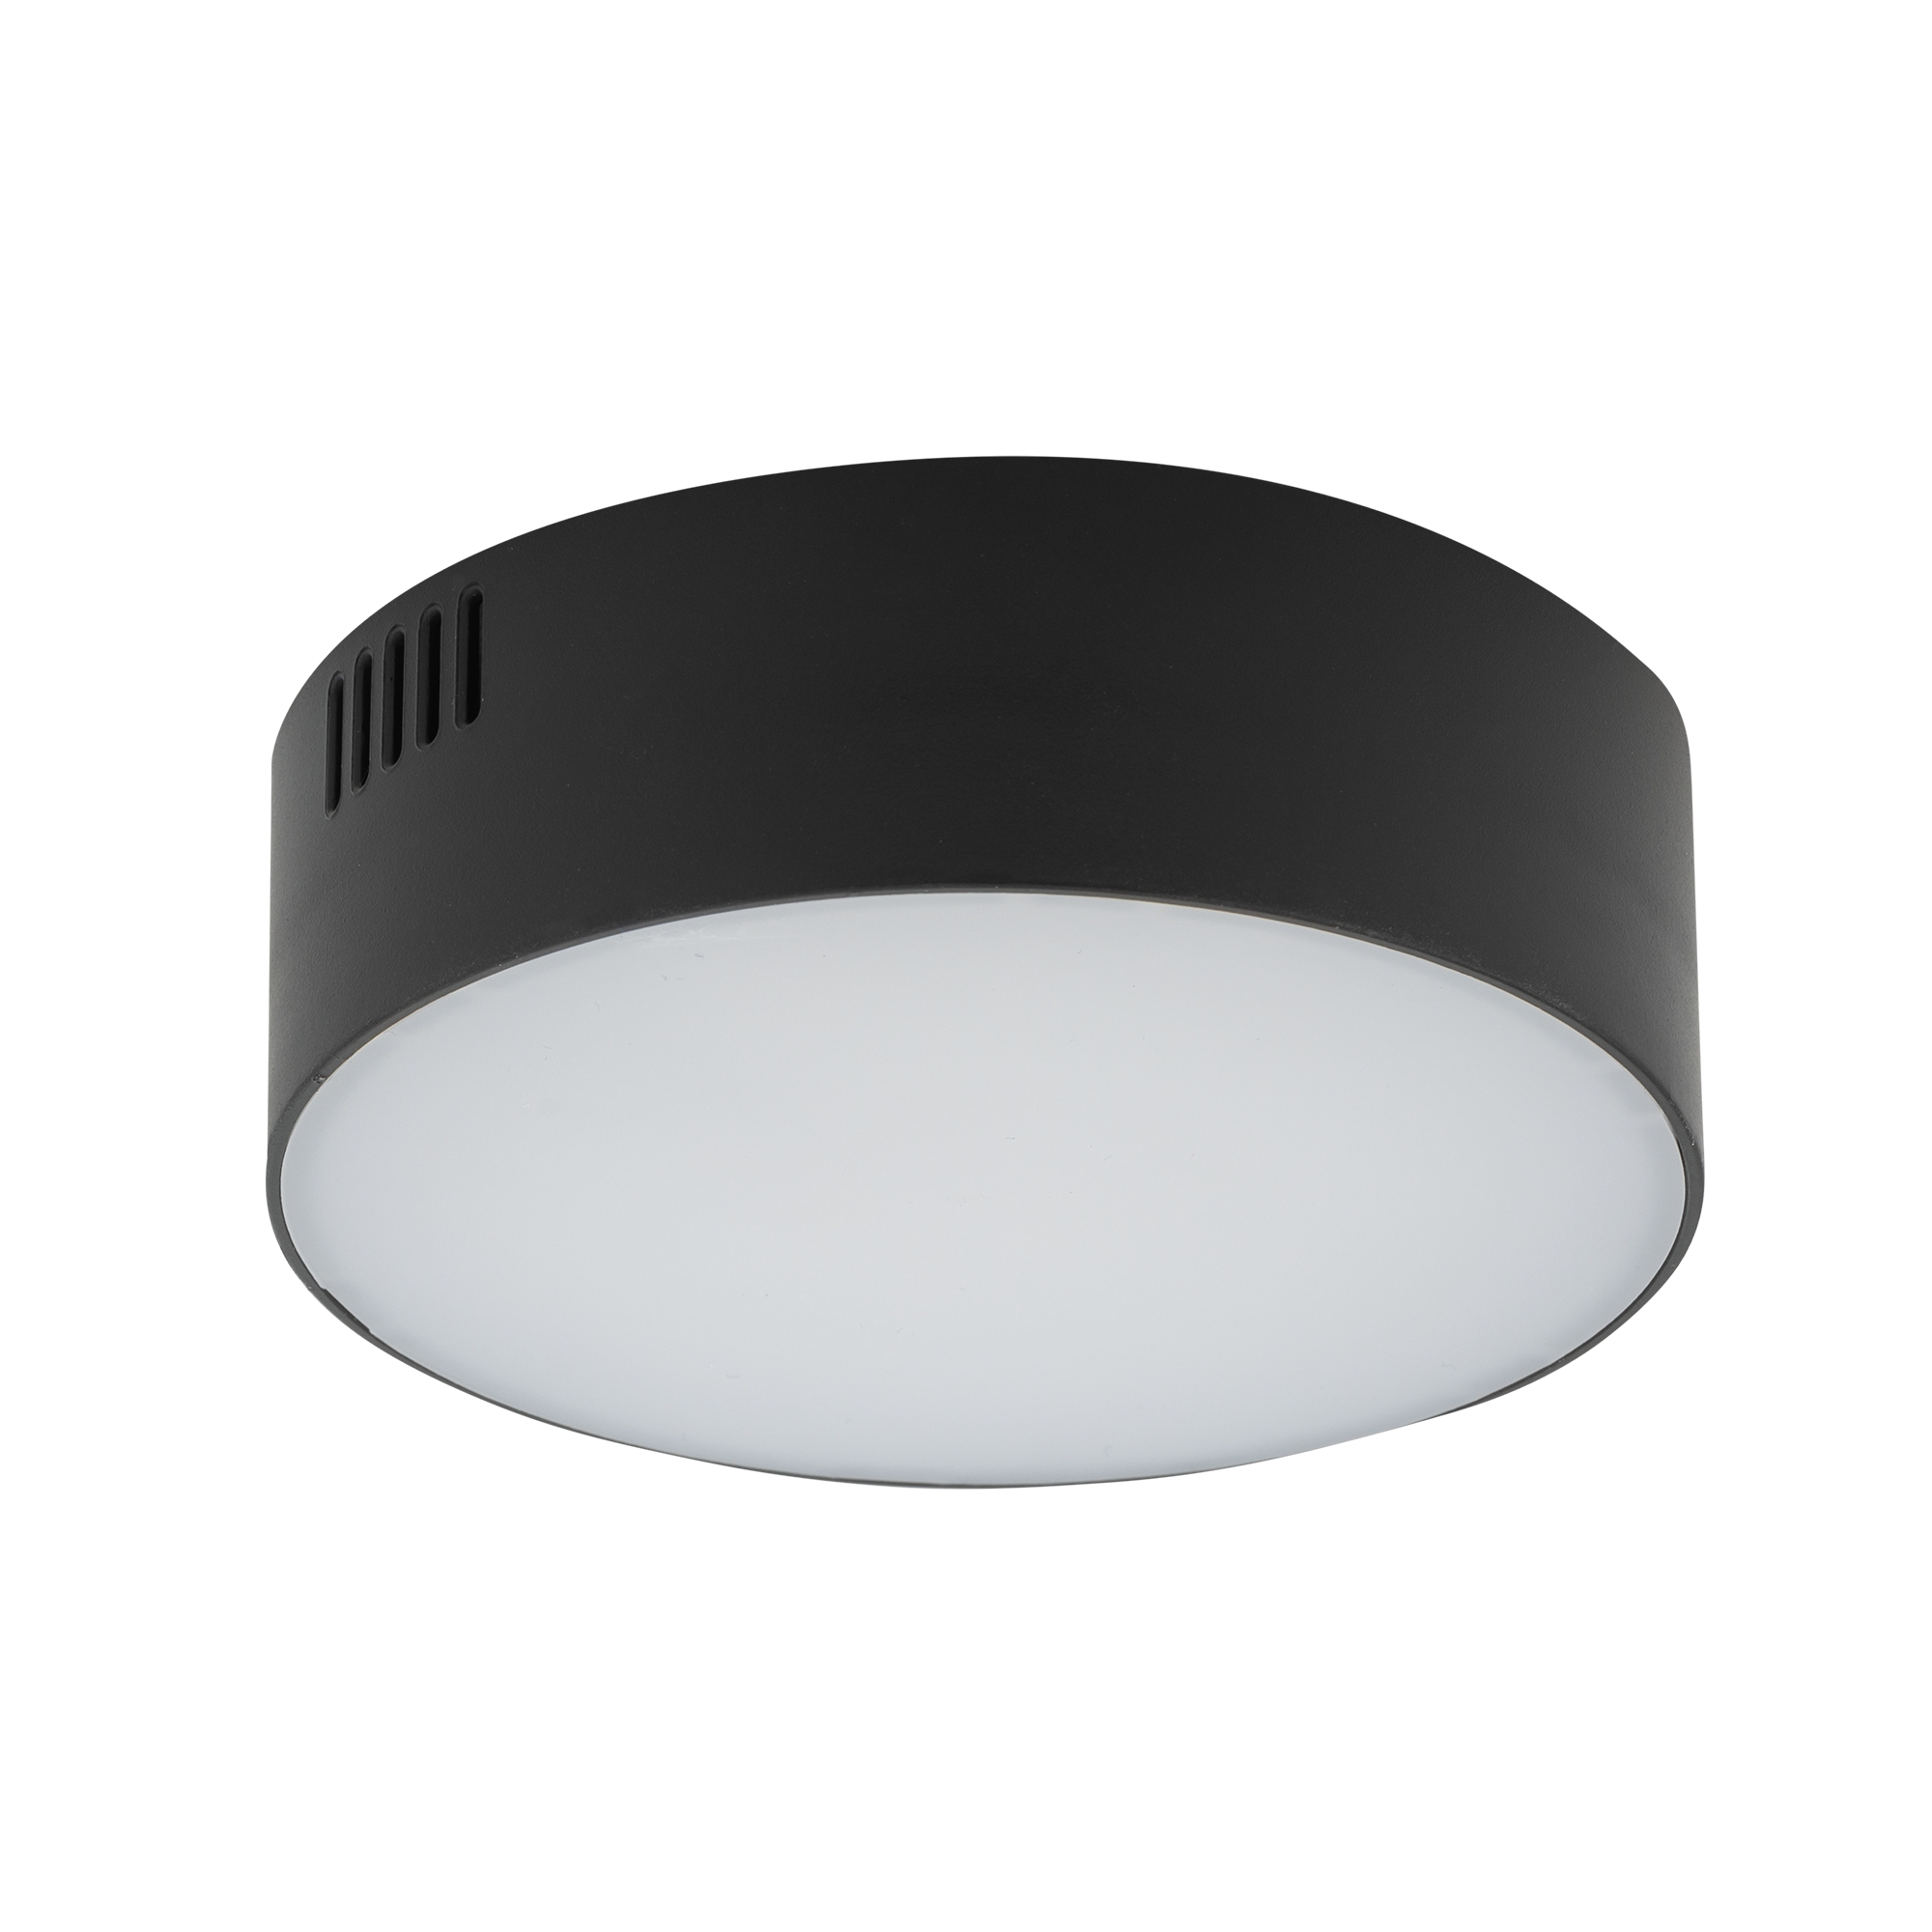 Lampa plafon LID ROUND LED 15W 4000K IP20 kolor czarny Nowodvorski 10415